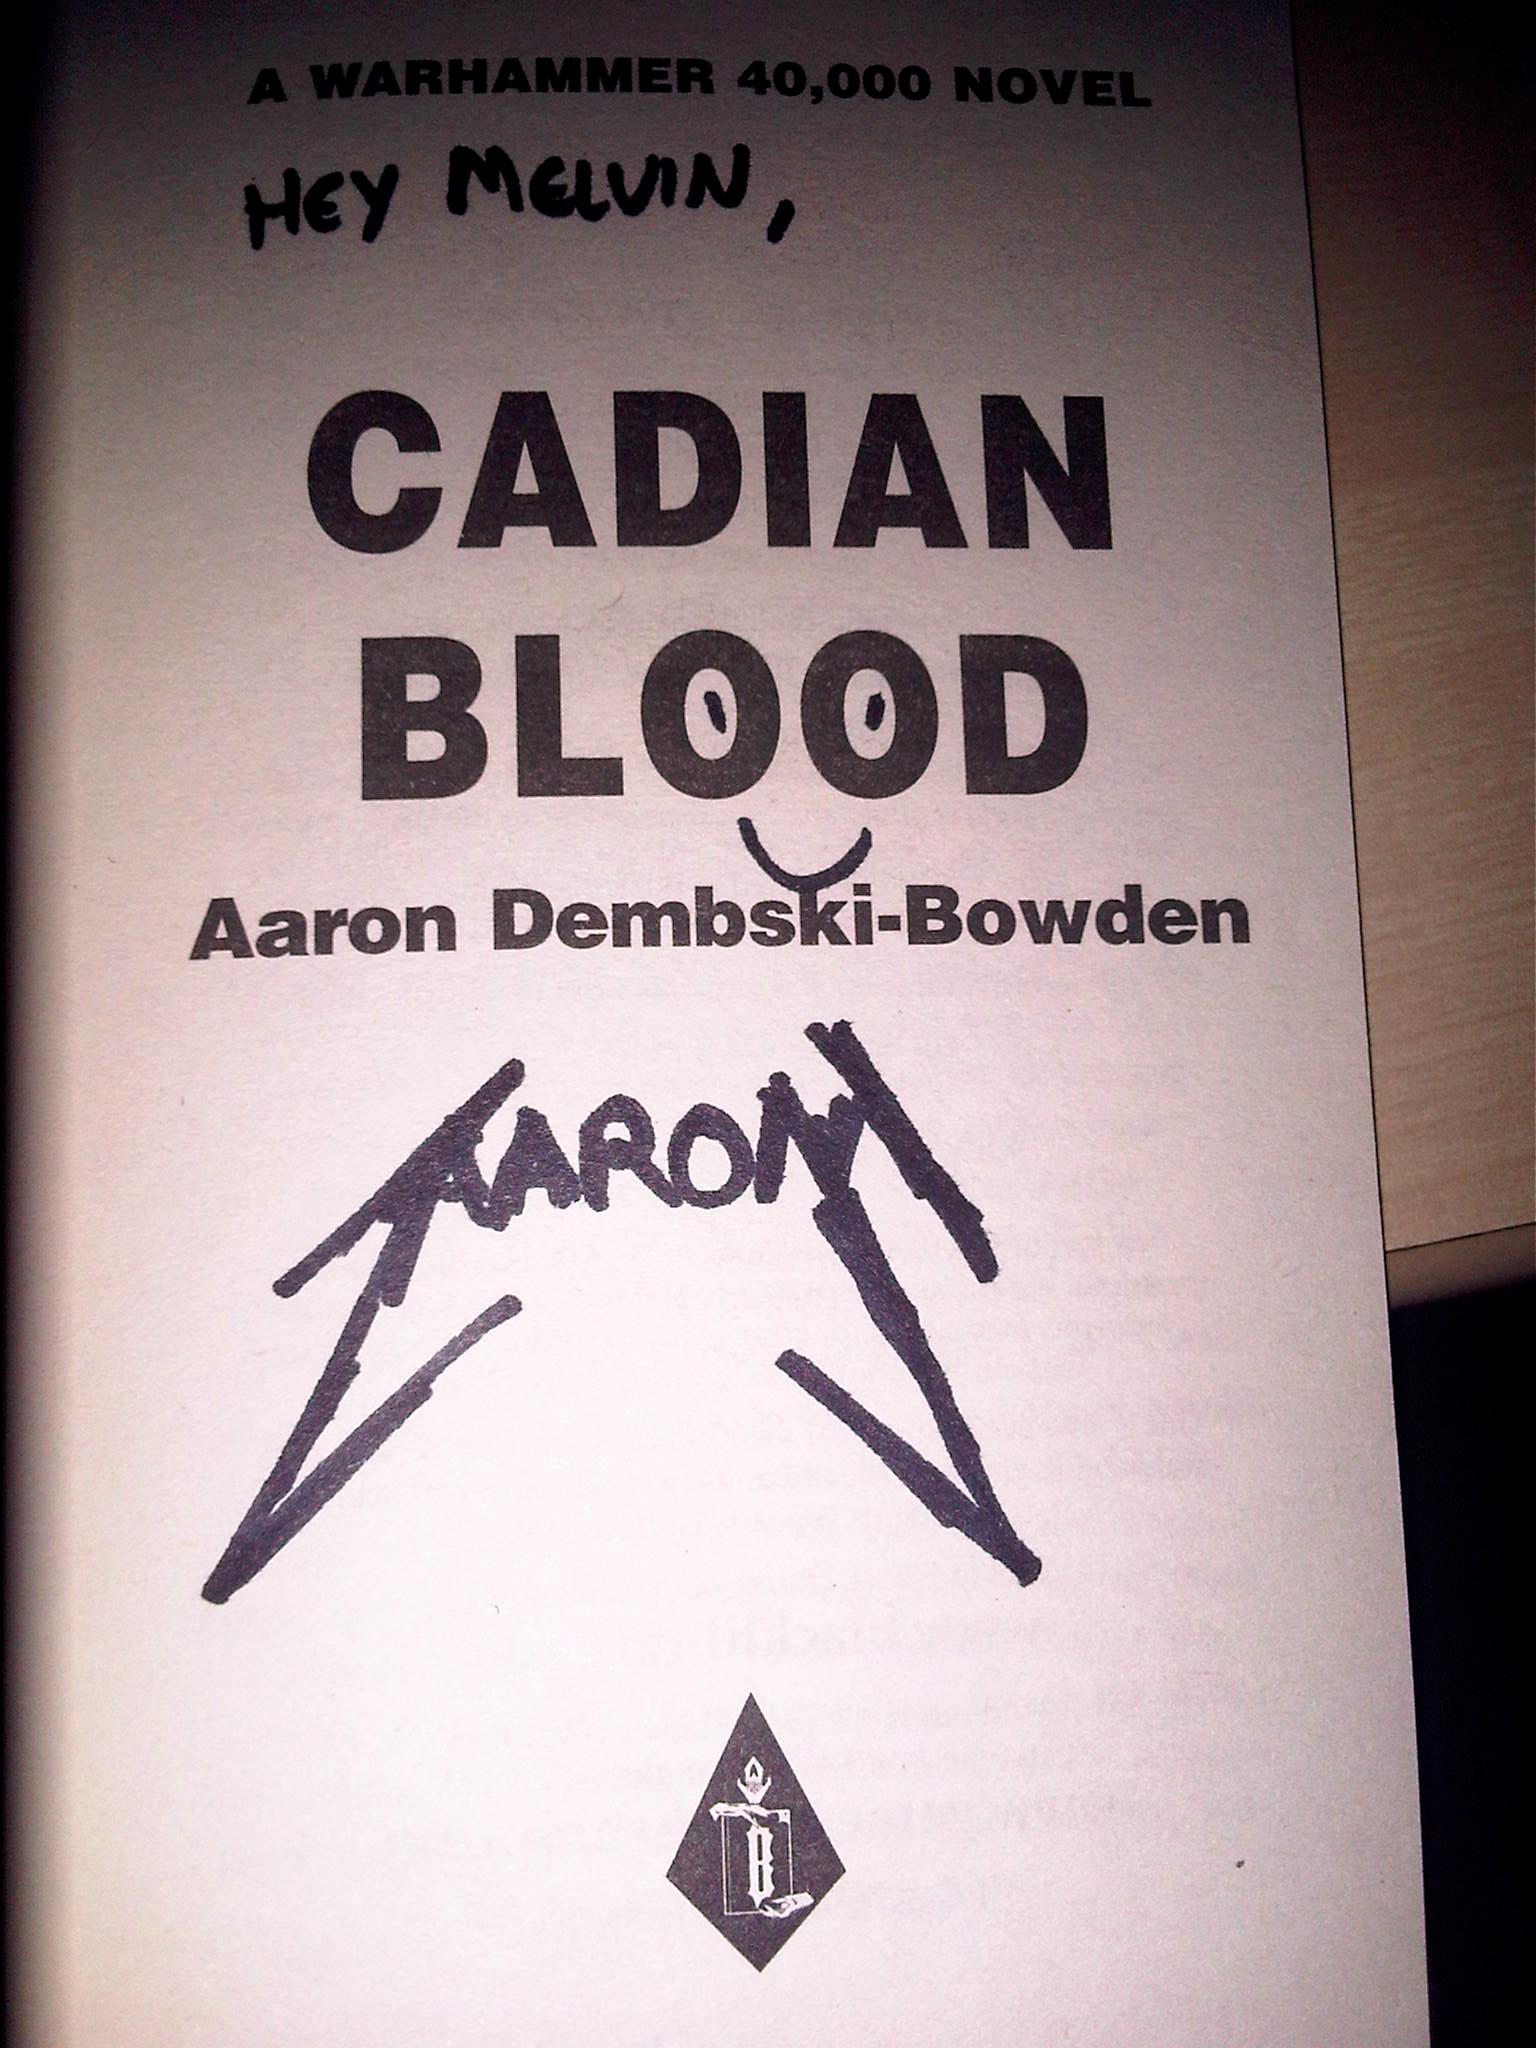 Aaron Dembski-bowden, Black Library, Dan Abnett, Signed Novels